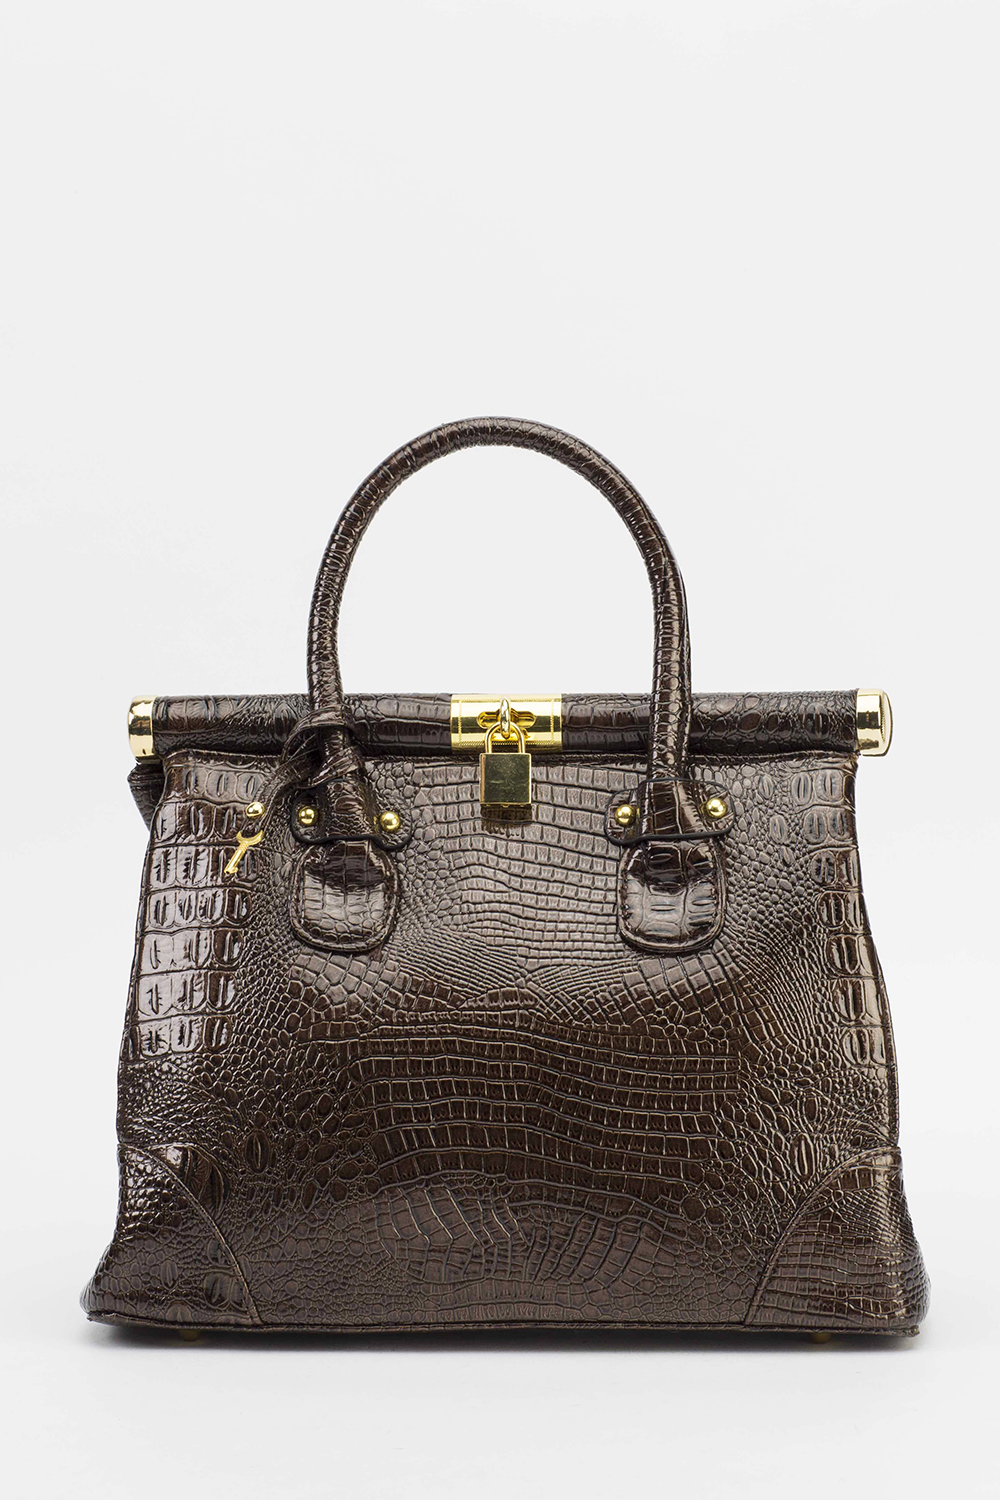 Golden Padlock Mock Croc Handbag - Just £5